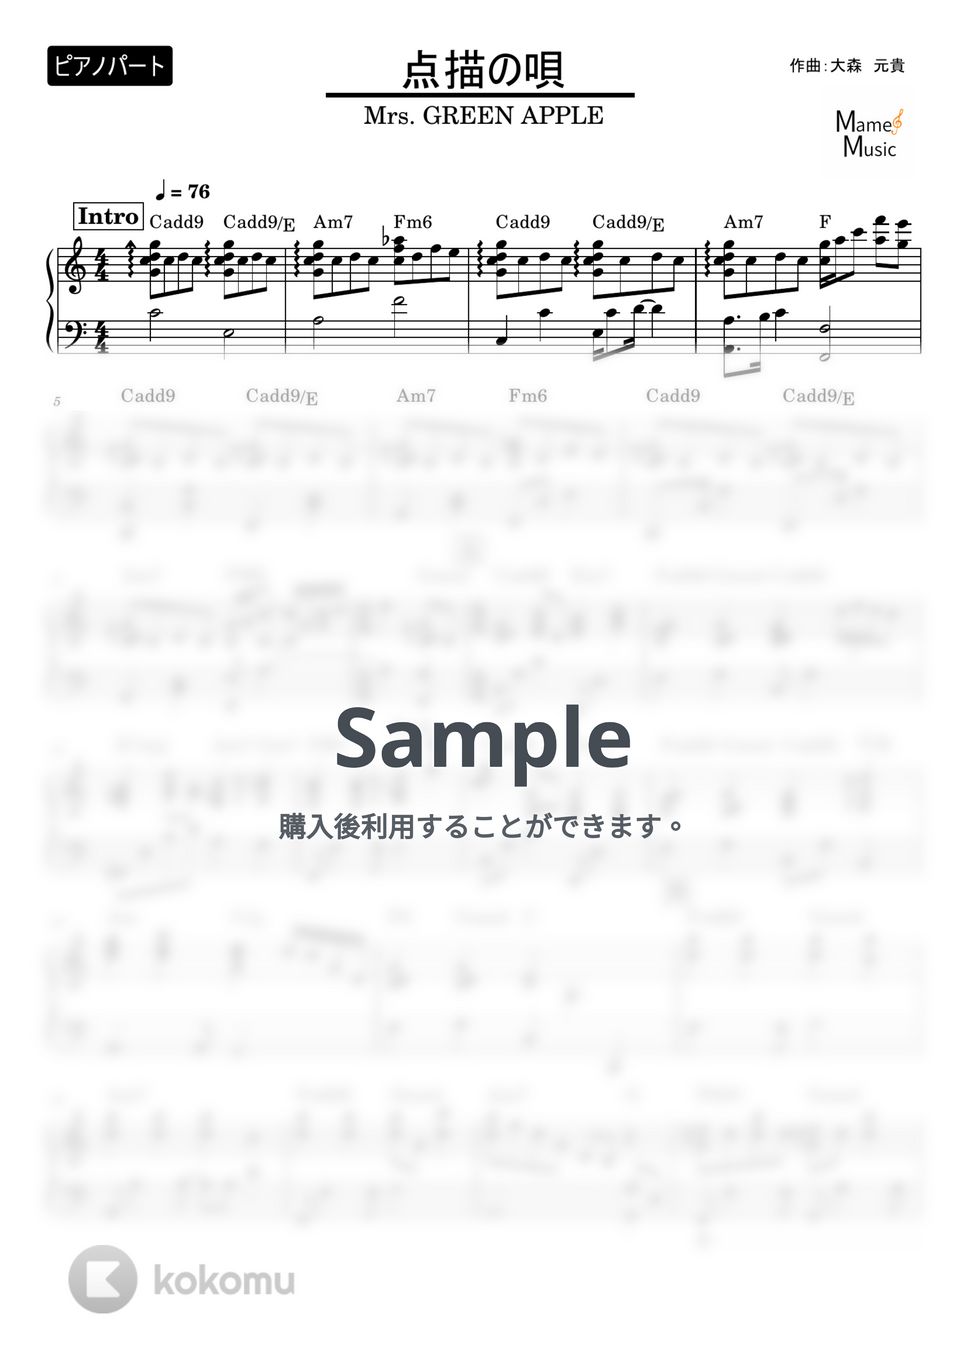 Mrs. GREEN APPLE - 点描の唄 (ピアノパート) by mame